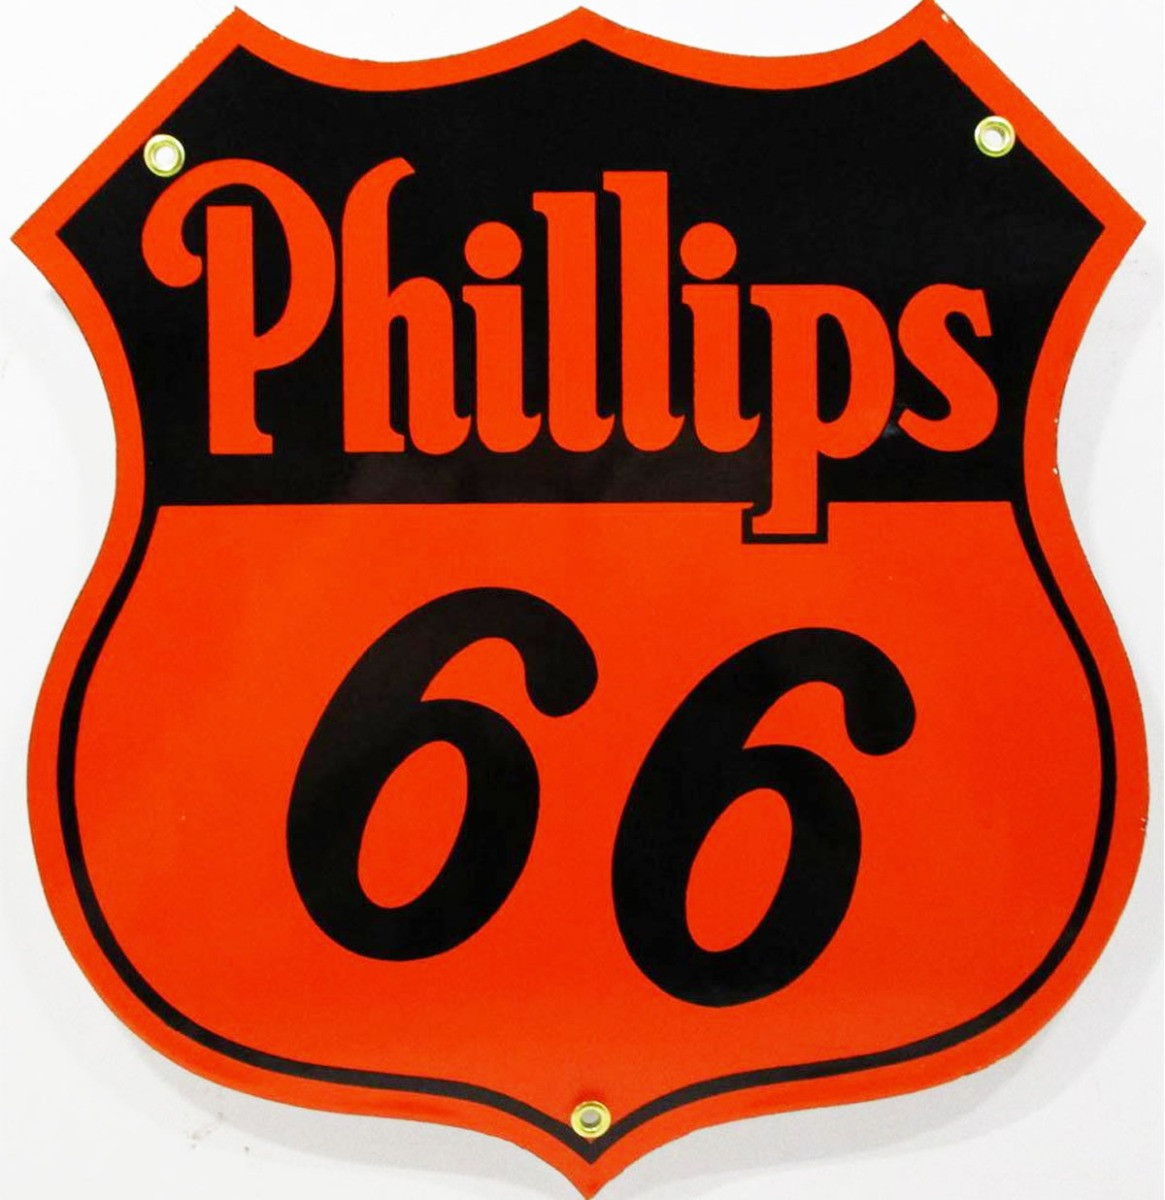 Phillips 66 Oranje Logo Emaille Bord 30 x 28 cm